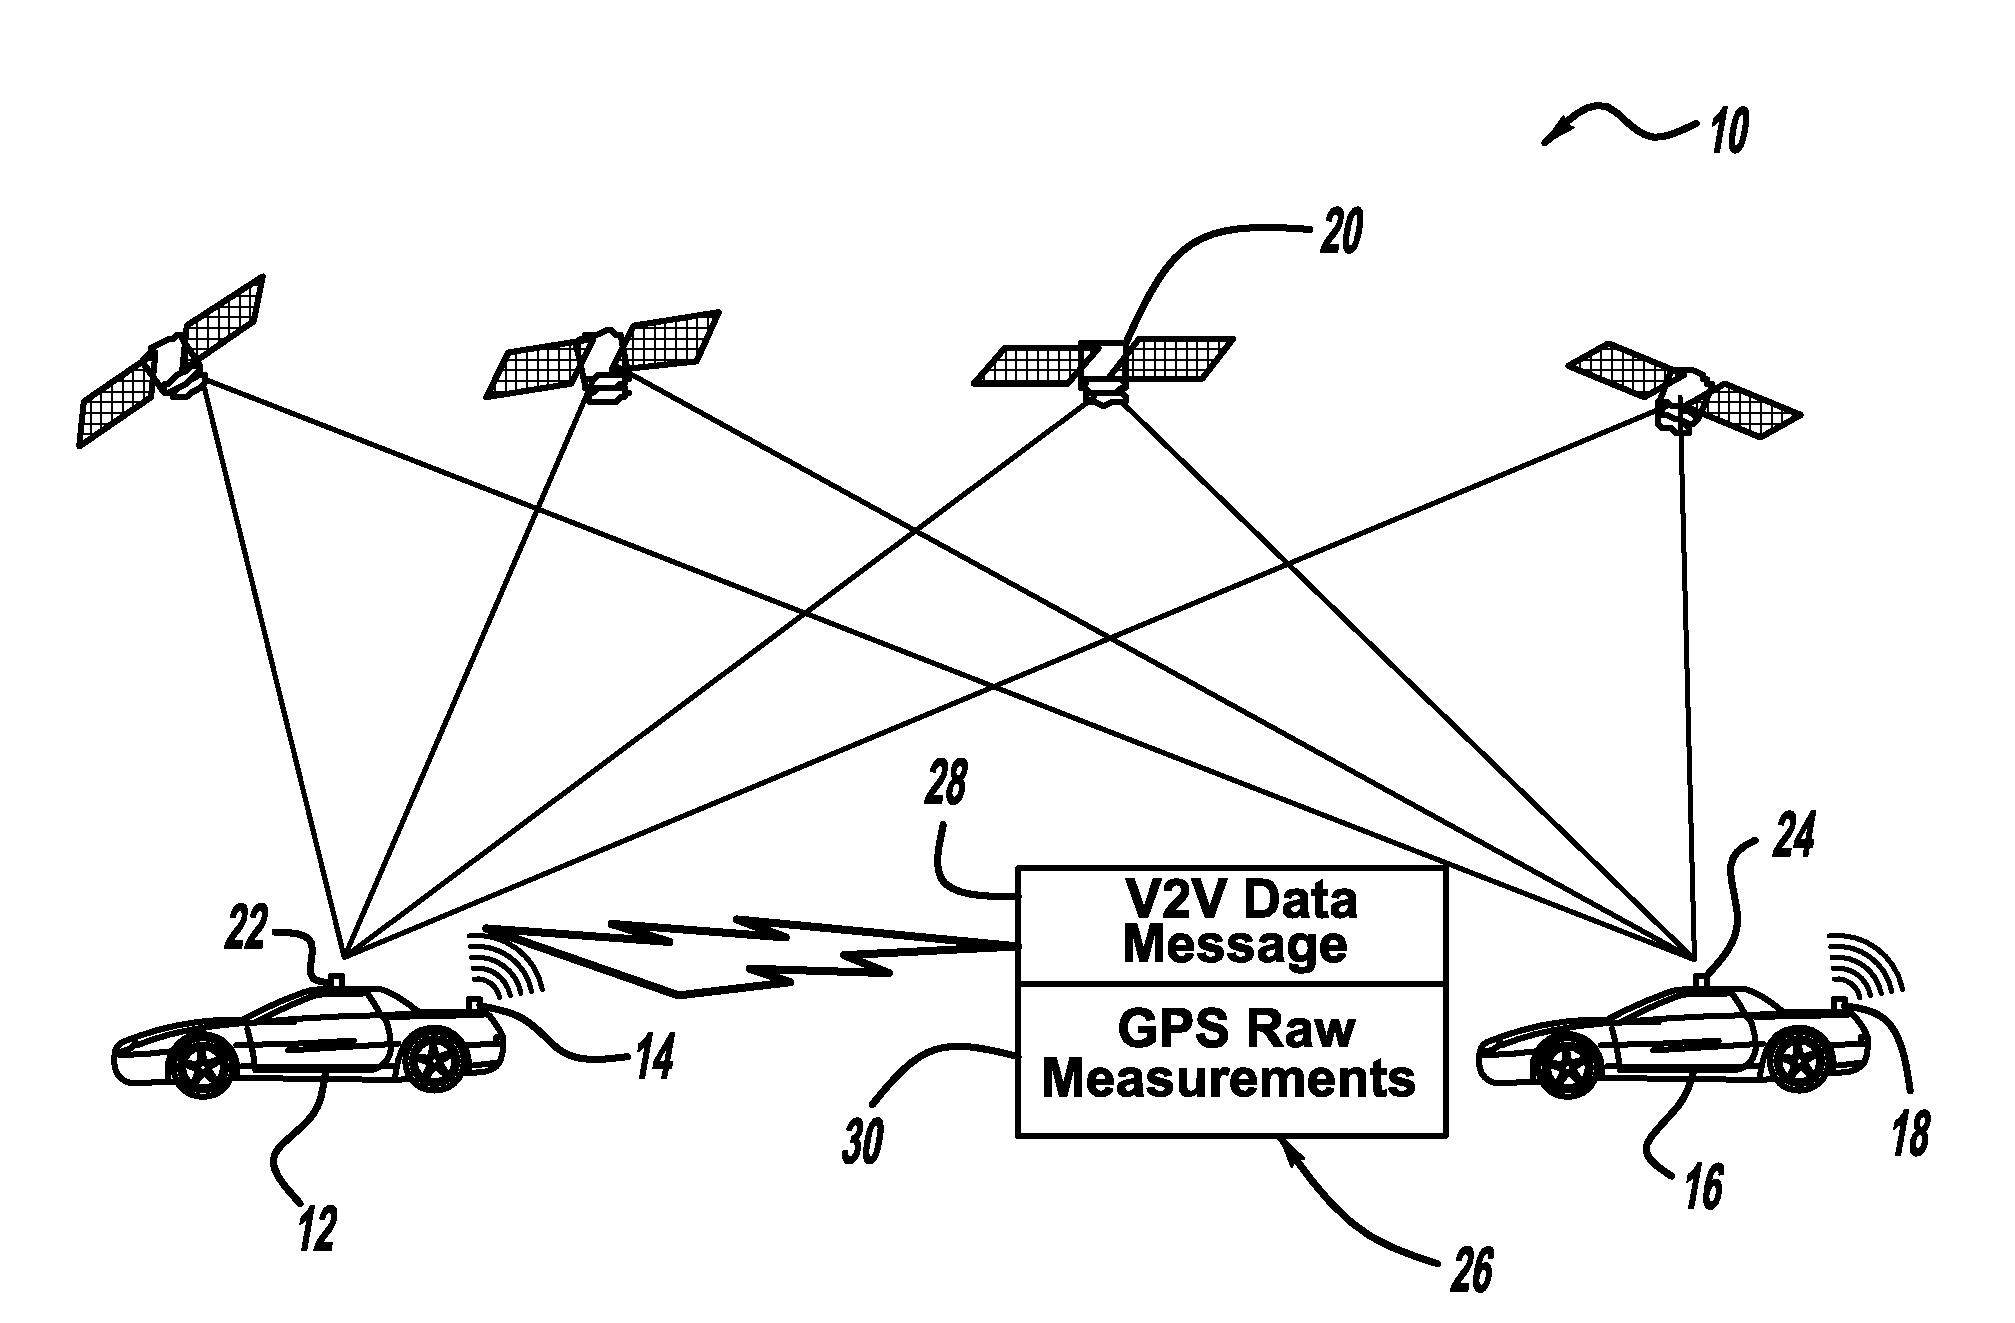 Dedicated short range communication (DSRC) sender validation using GPS precise positioning techniques